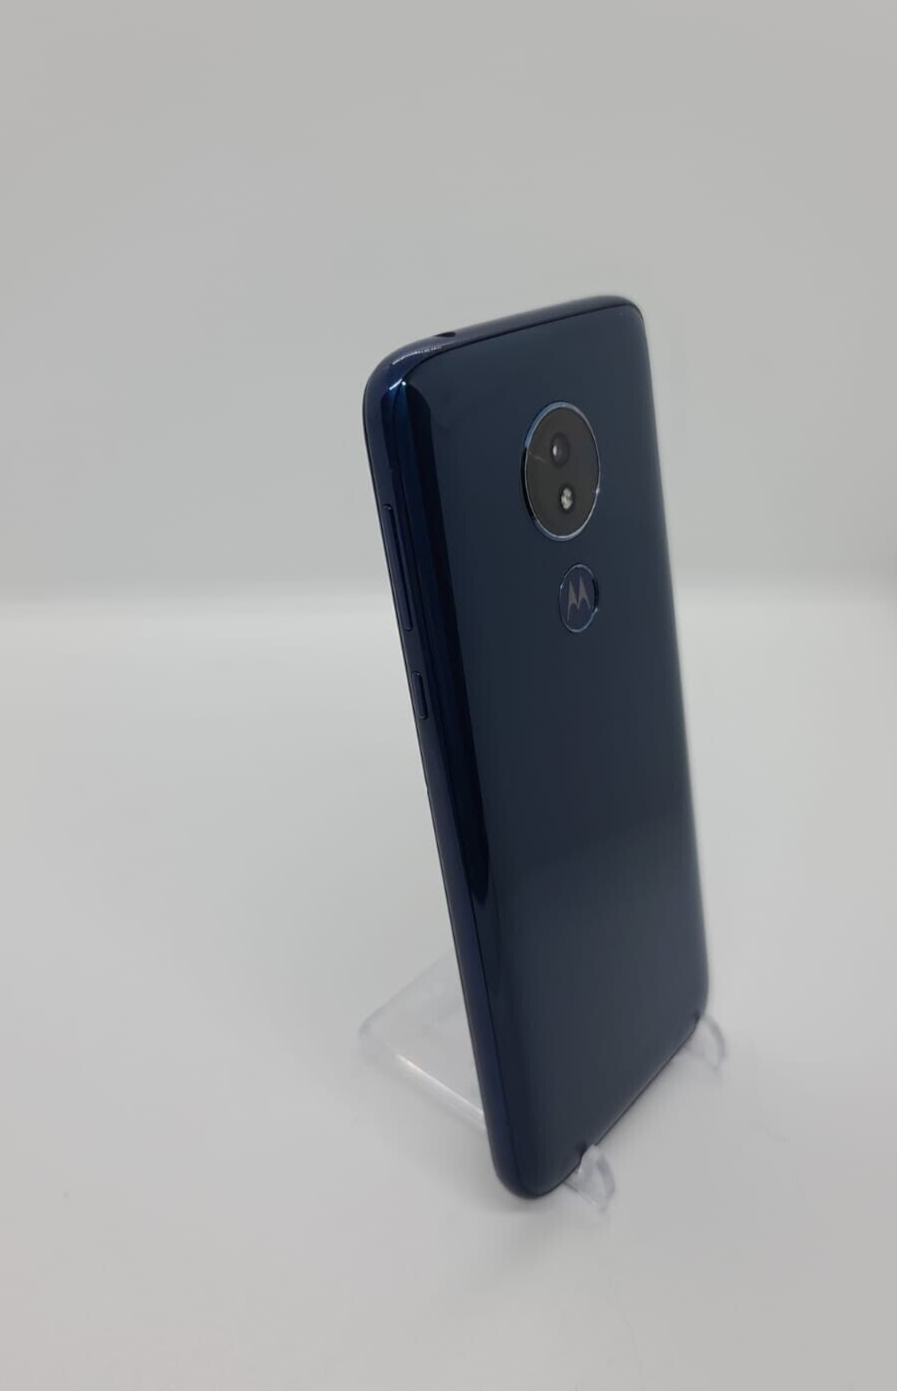 Moto G7 Power 32GB MetroPCS Unlocked Android 4G LTE Smartphone Blue XT1955-5